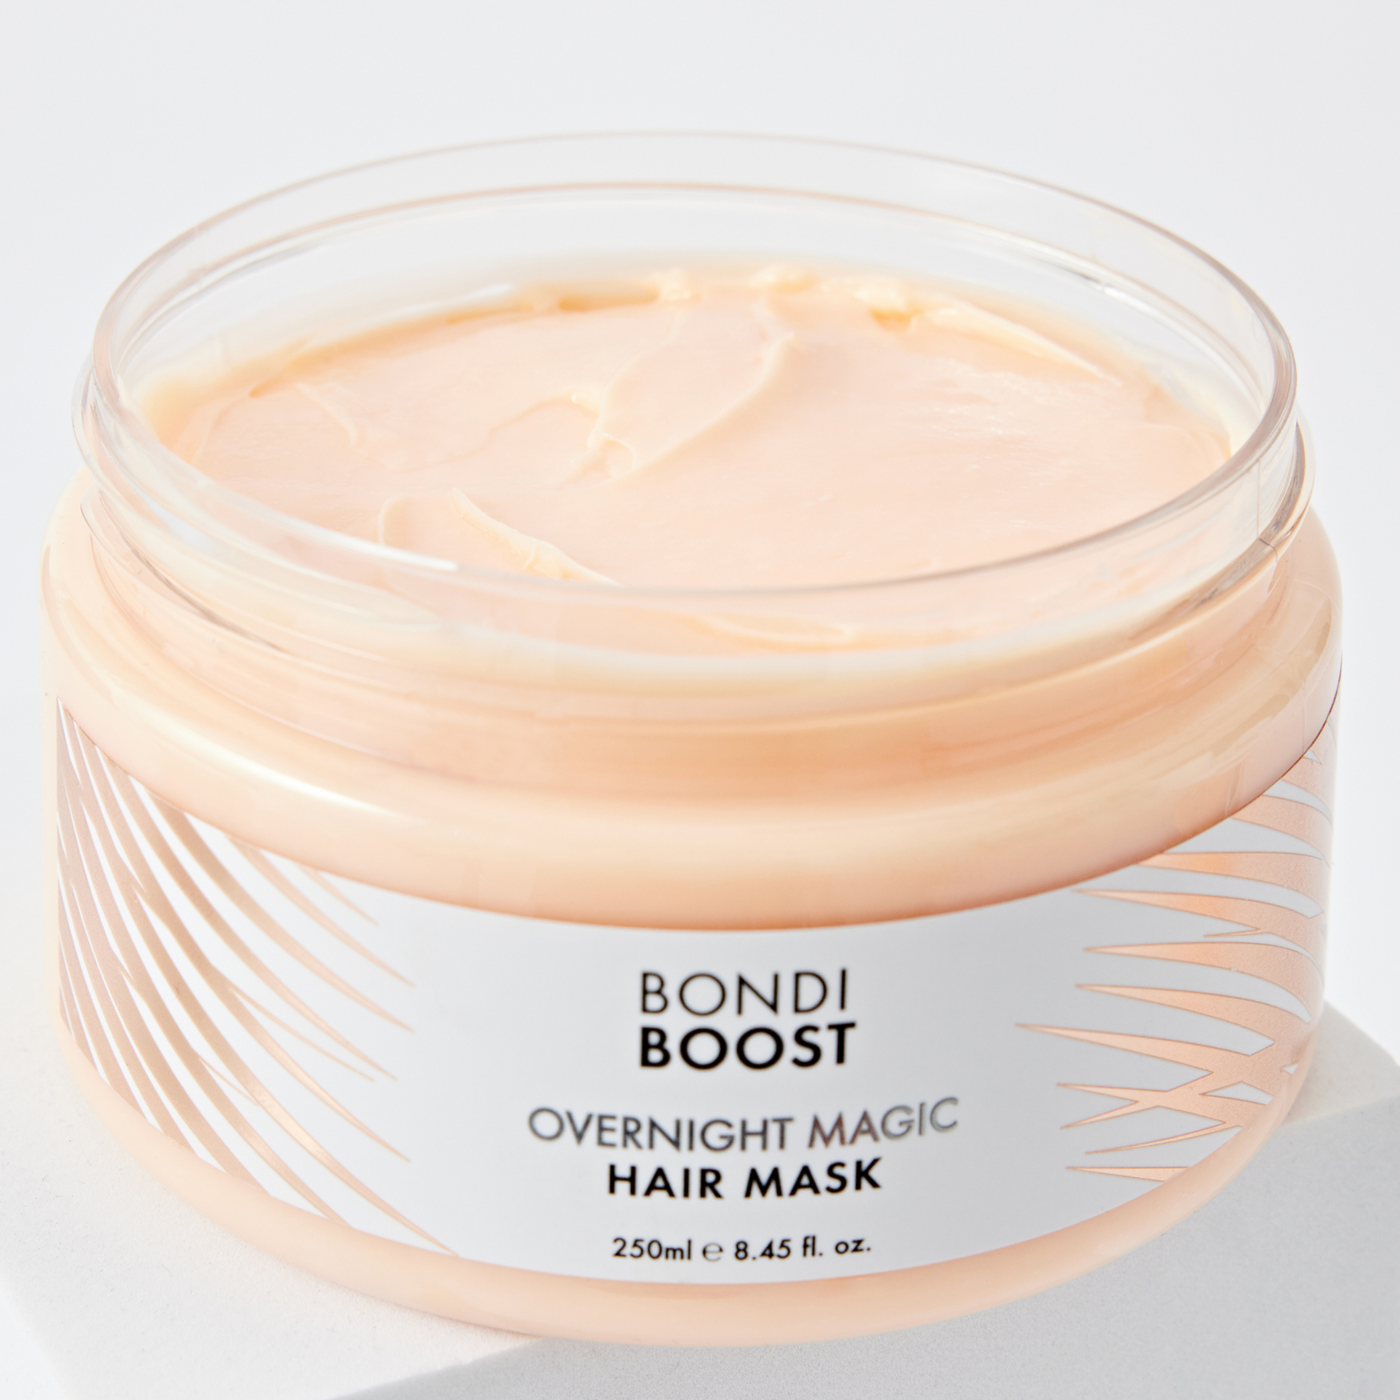 BondiBoost Overnight Magic Hair Mask (250ml) sample product content